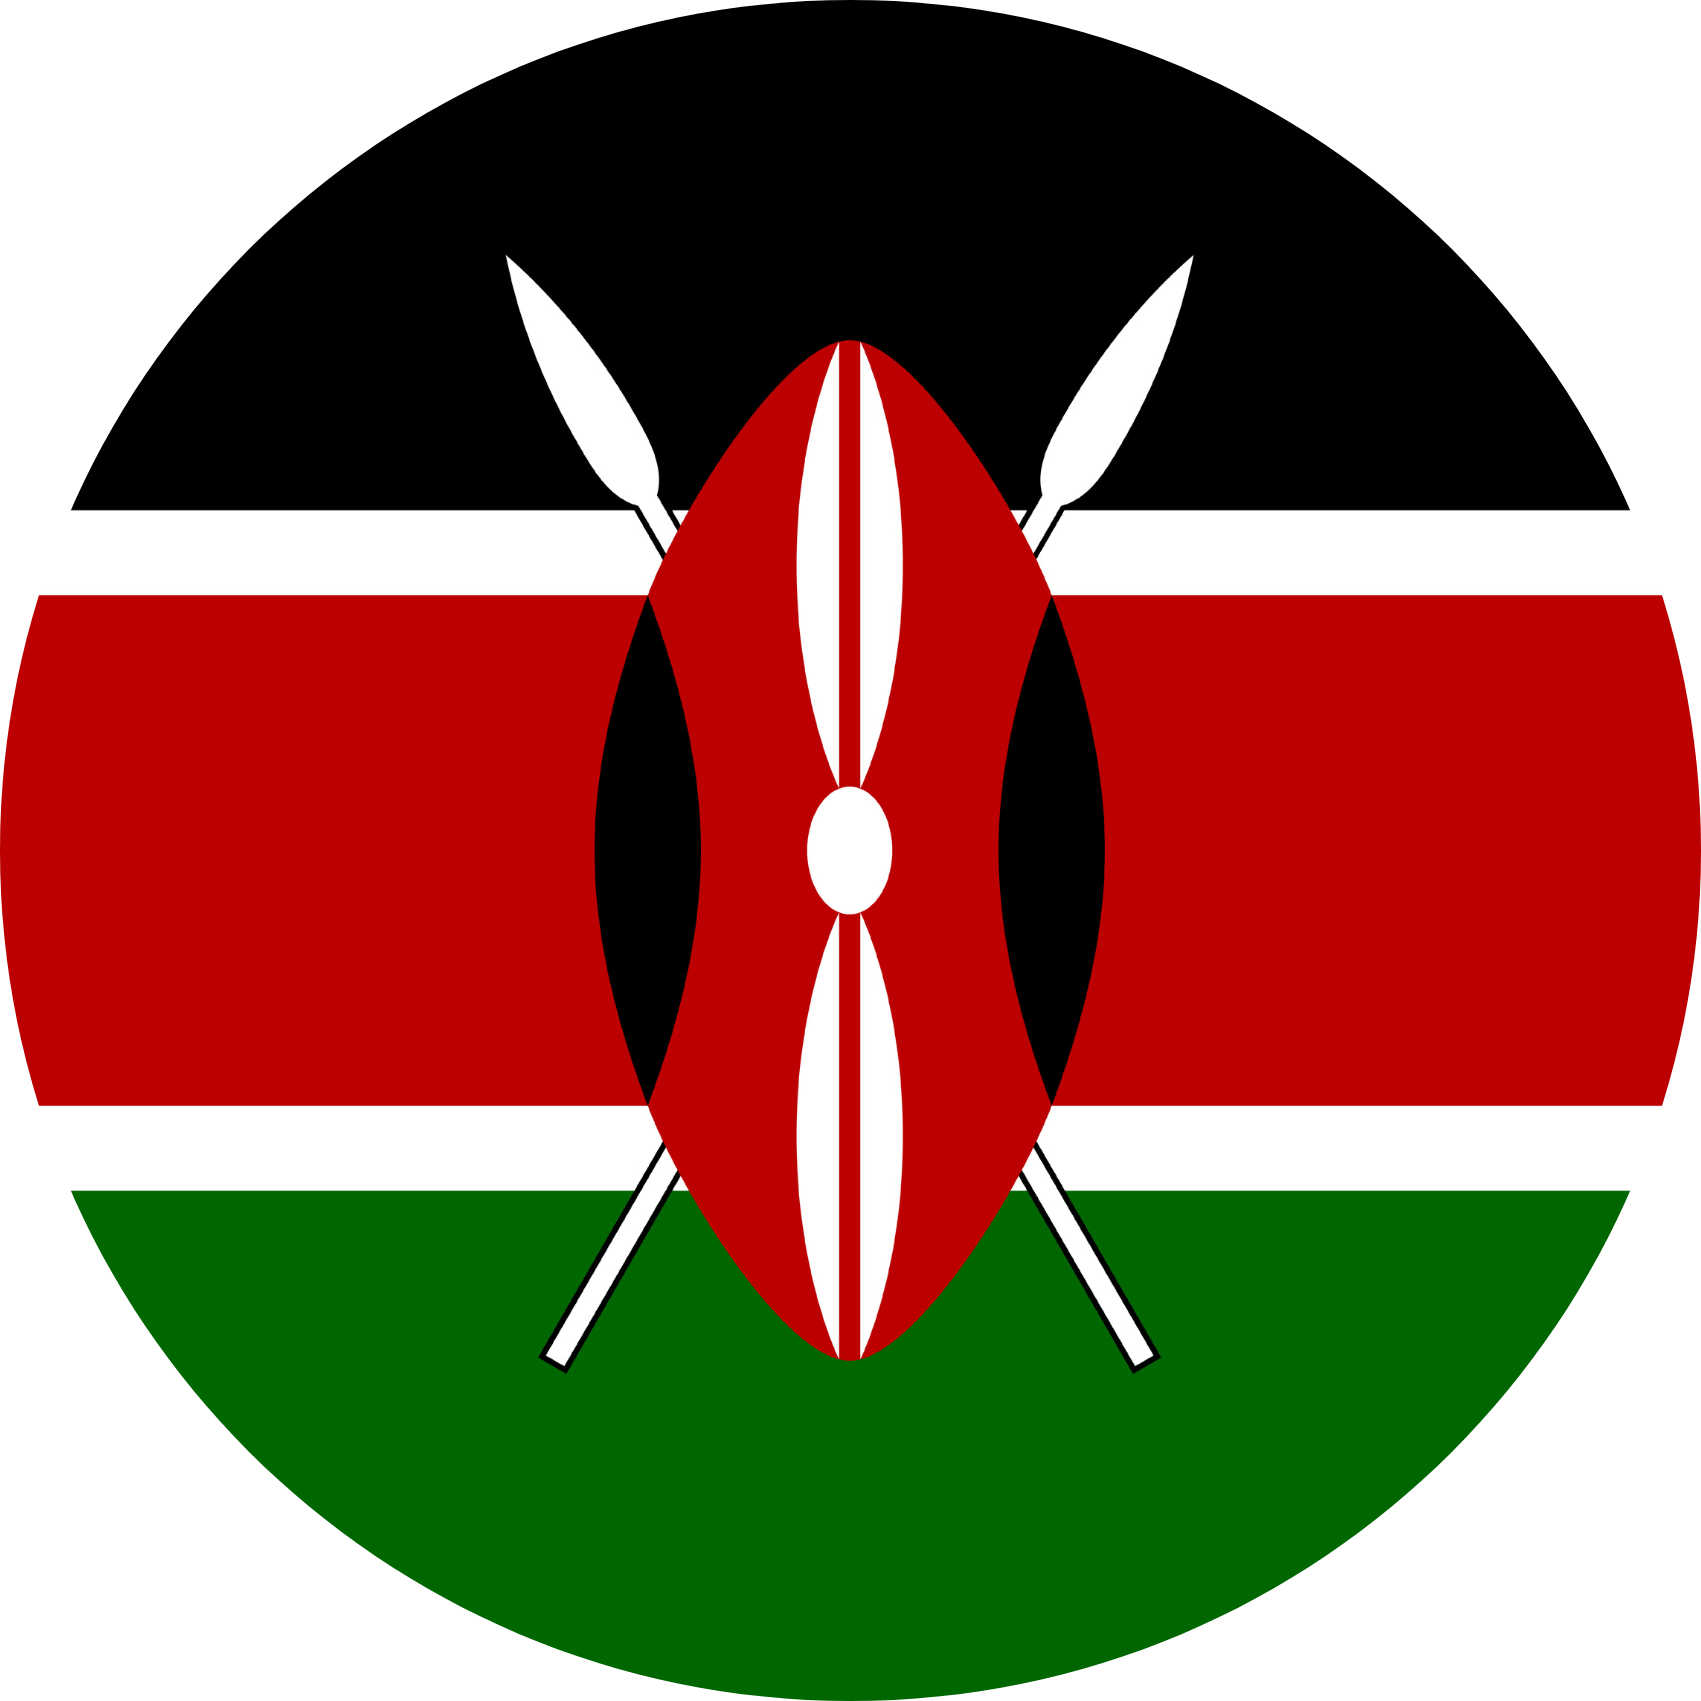 Flag of Kenya in a circle